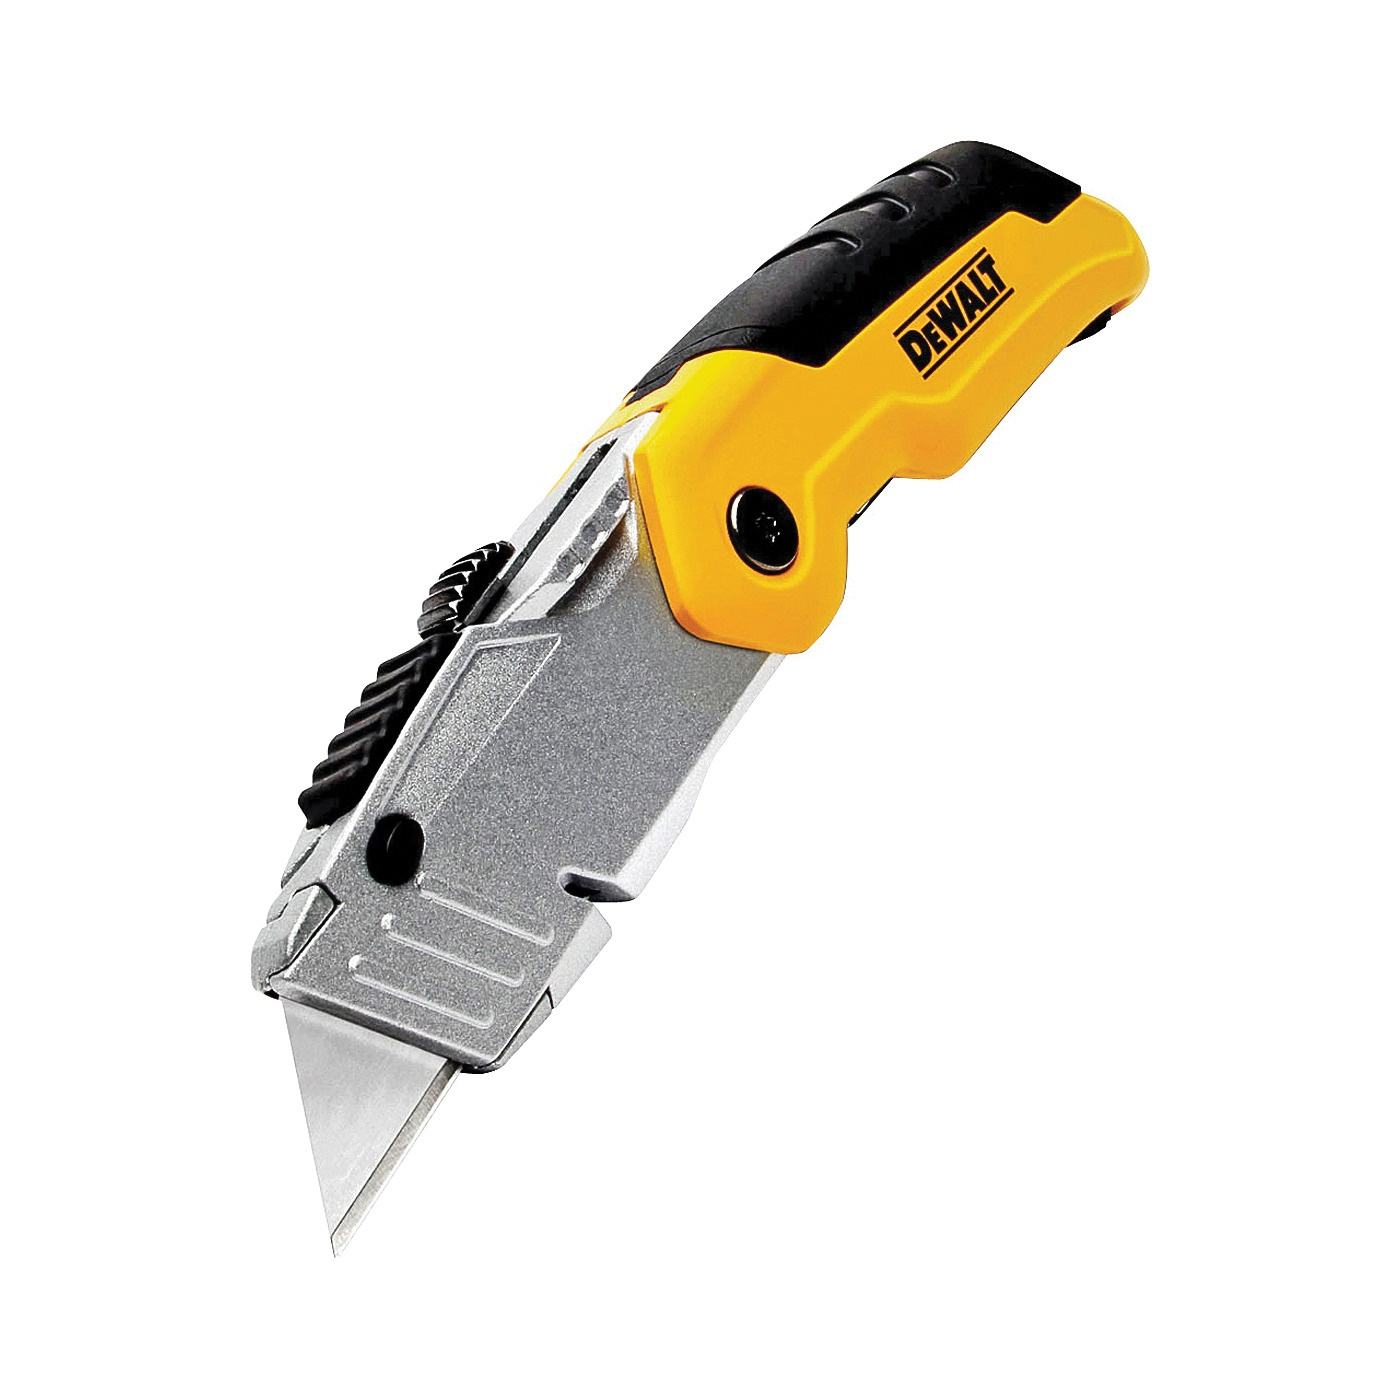 DeWALT DWHT10035L Utility Knife, 2-1/2 in L Blade, Stainless Steel Blade, Long Handle, Black/Yellow/Silver Handle - 1